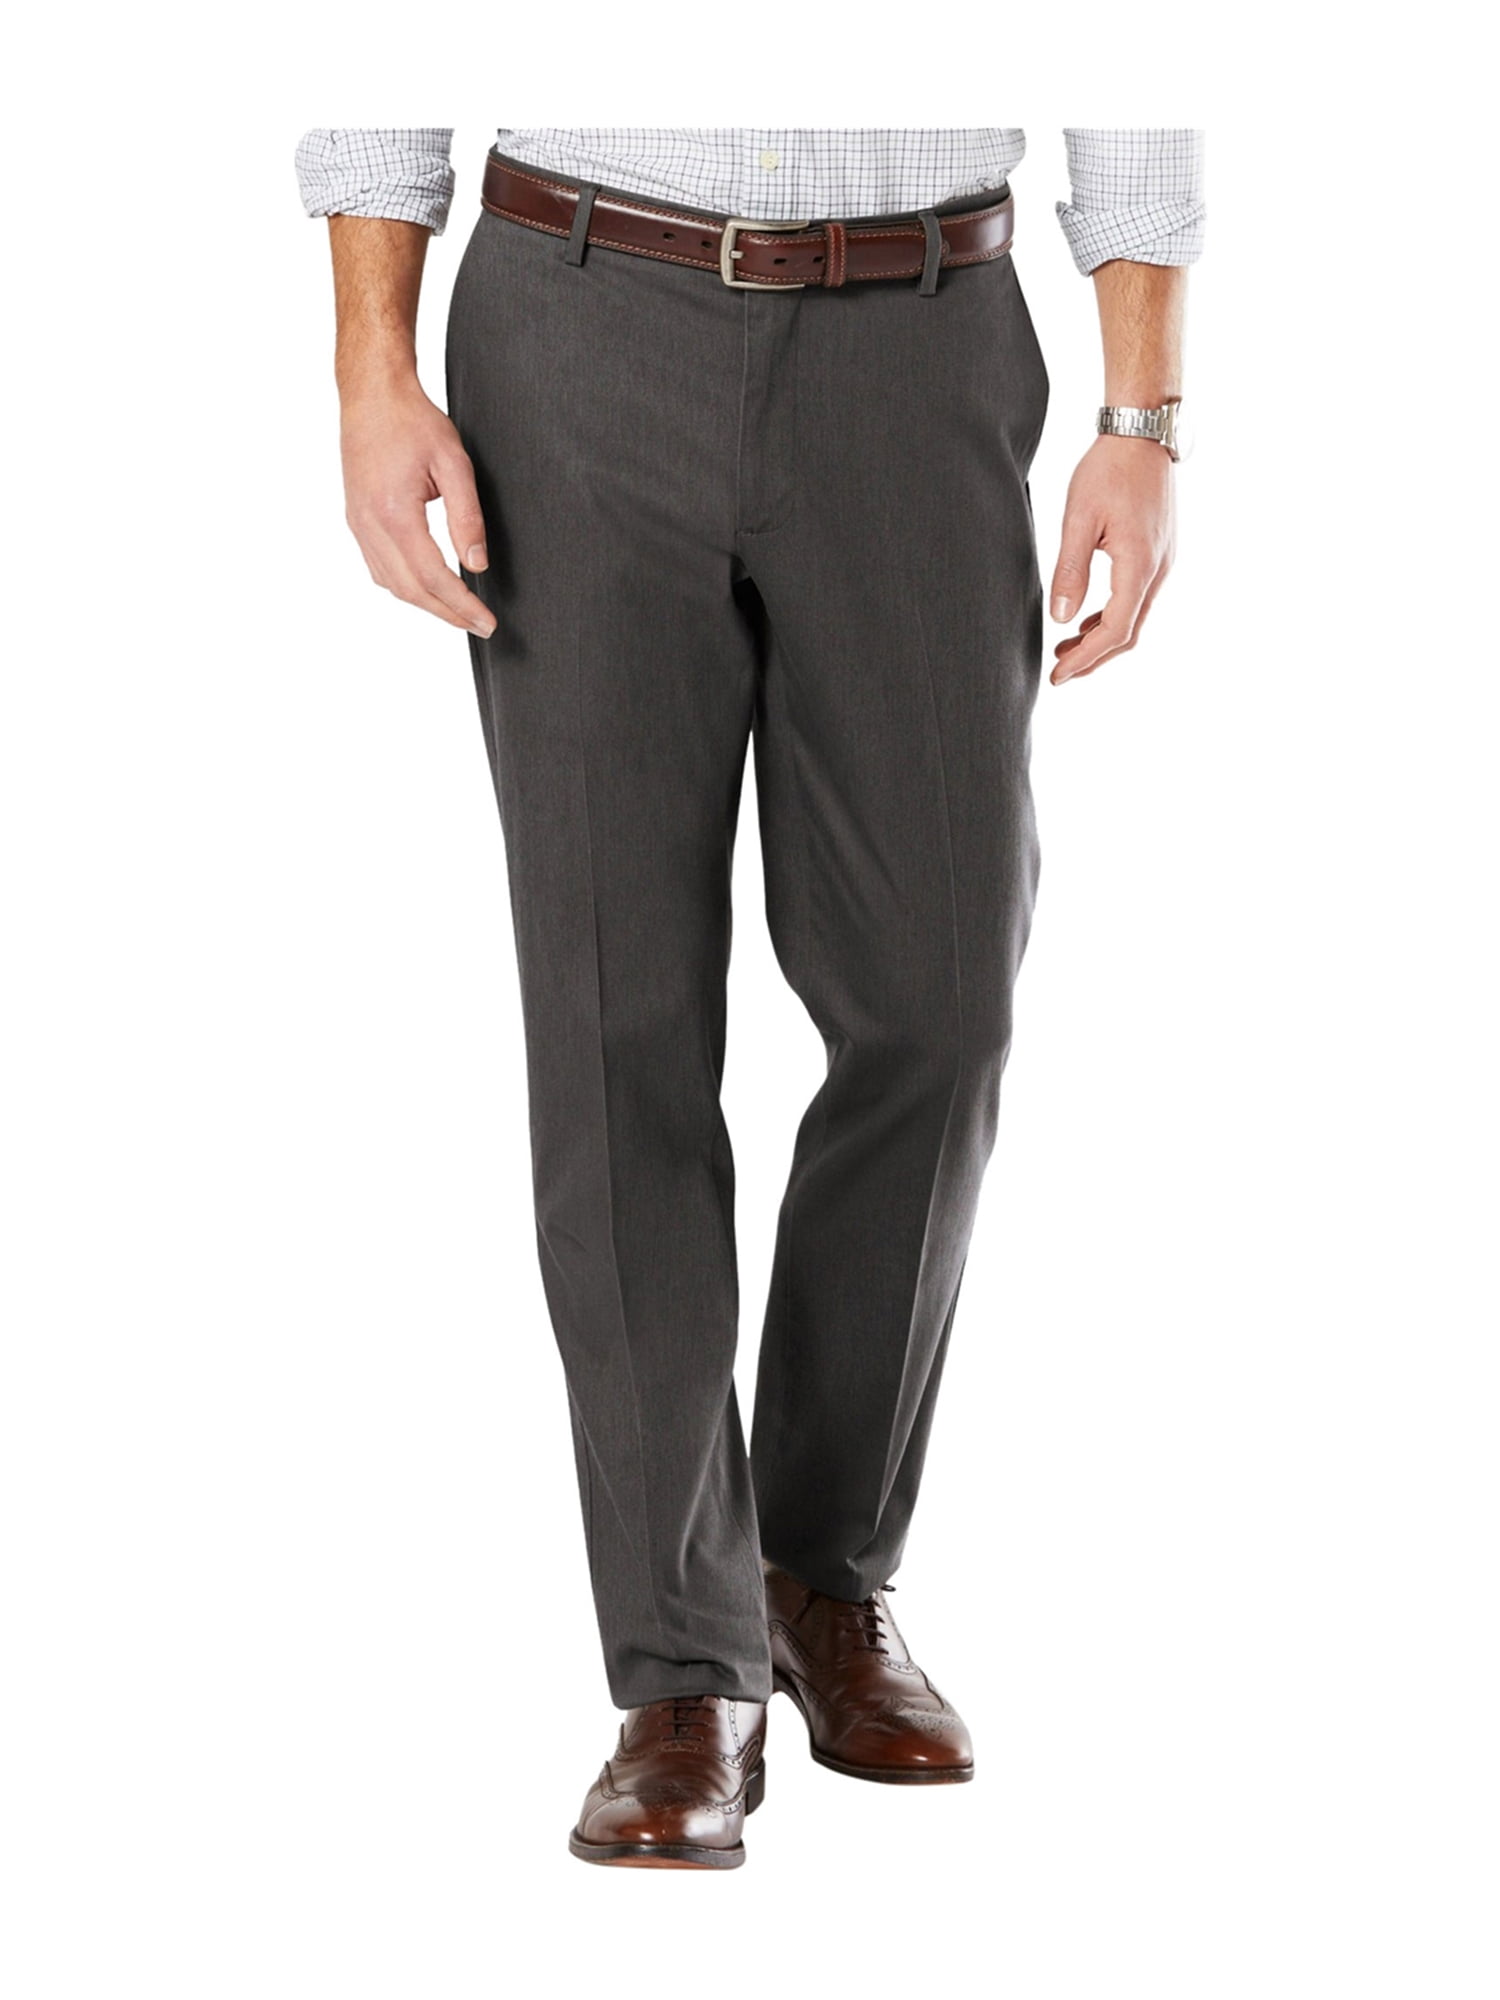 Dockers Mens Signature khaki Dress Pants Slacks gray 36x34 | Walmart Canada